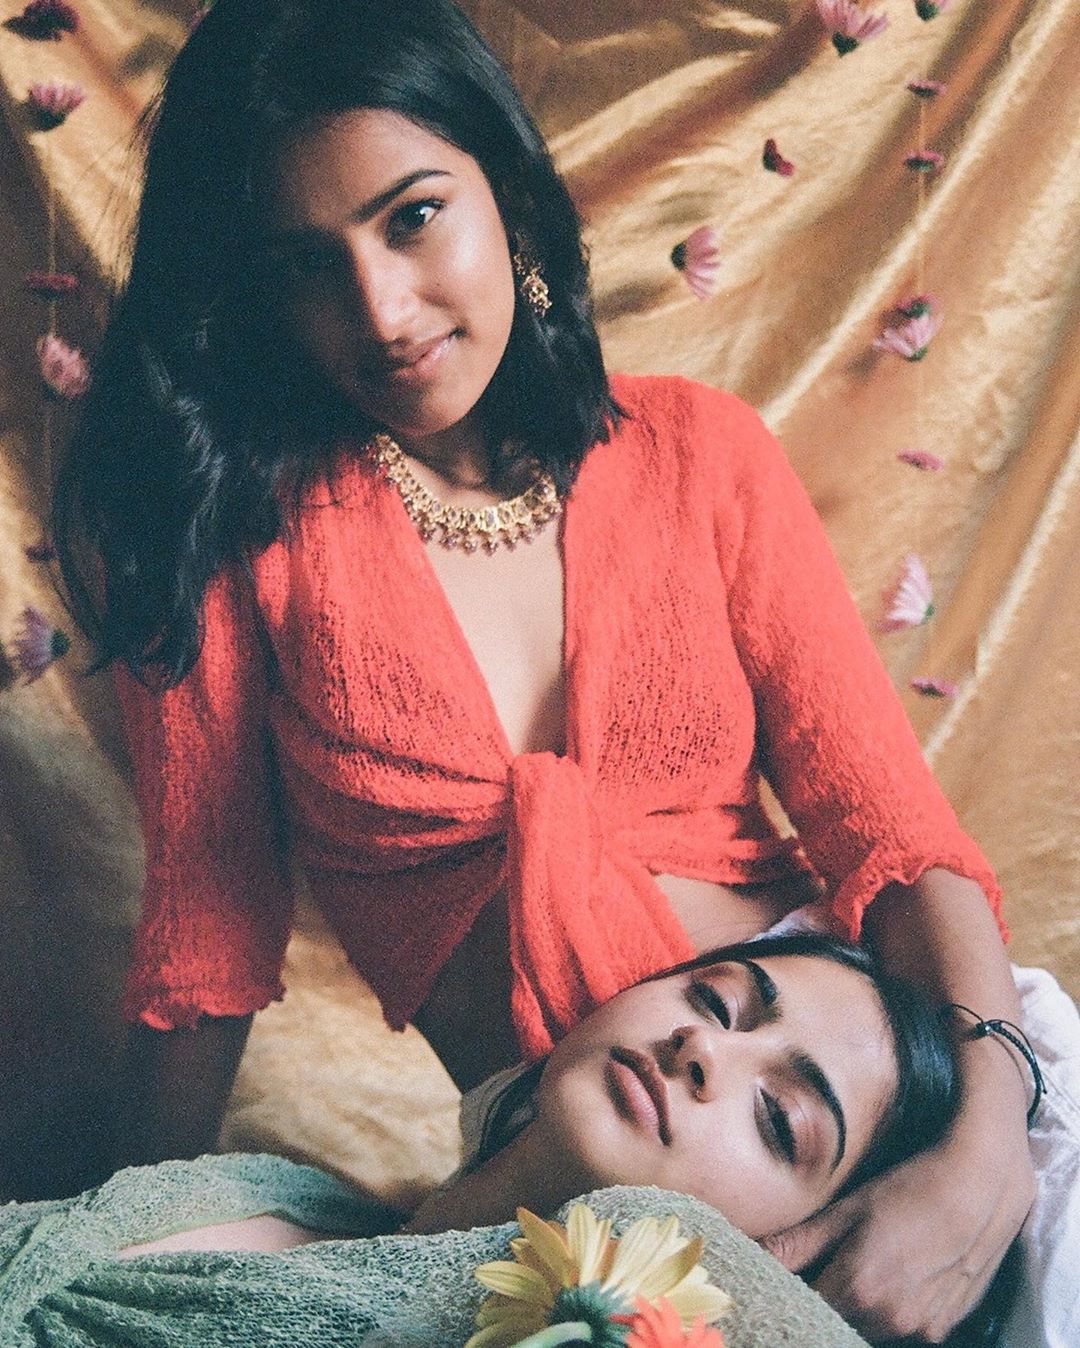 Photoshoot Of Same Sex Hindu-Muslim Couple 